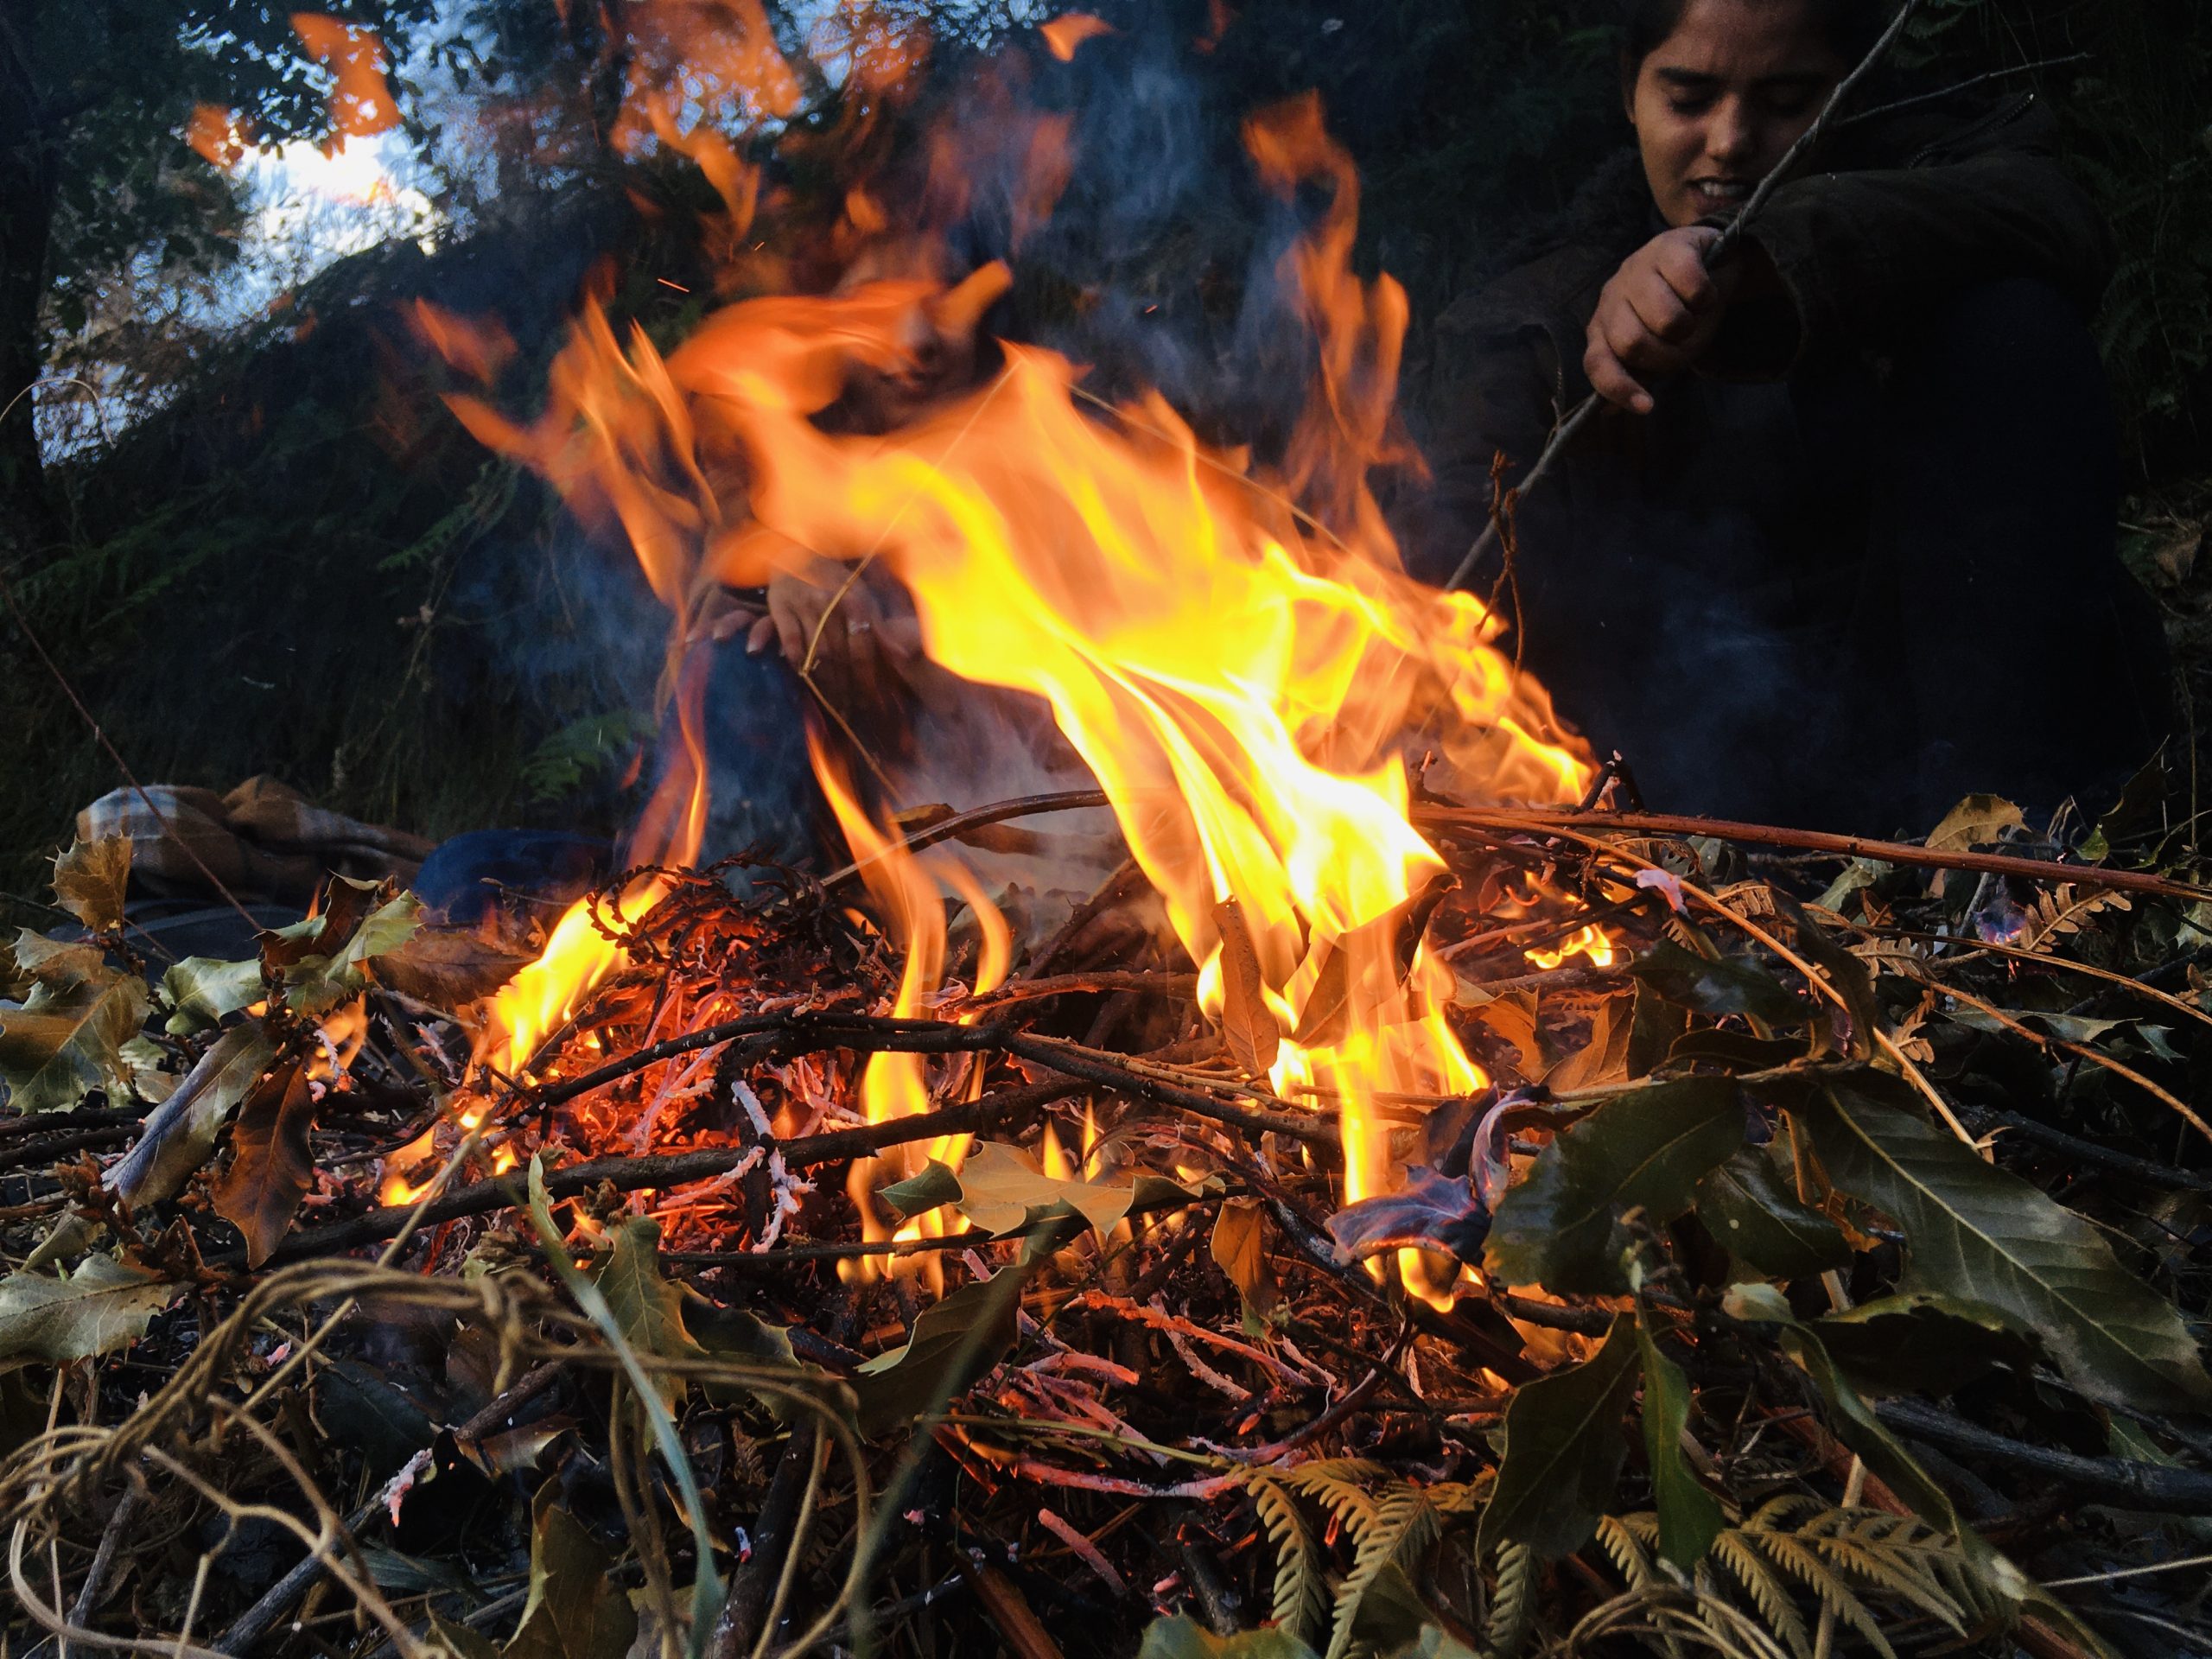 A campfire